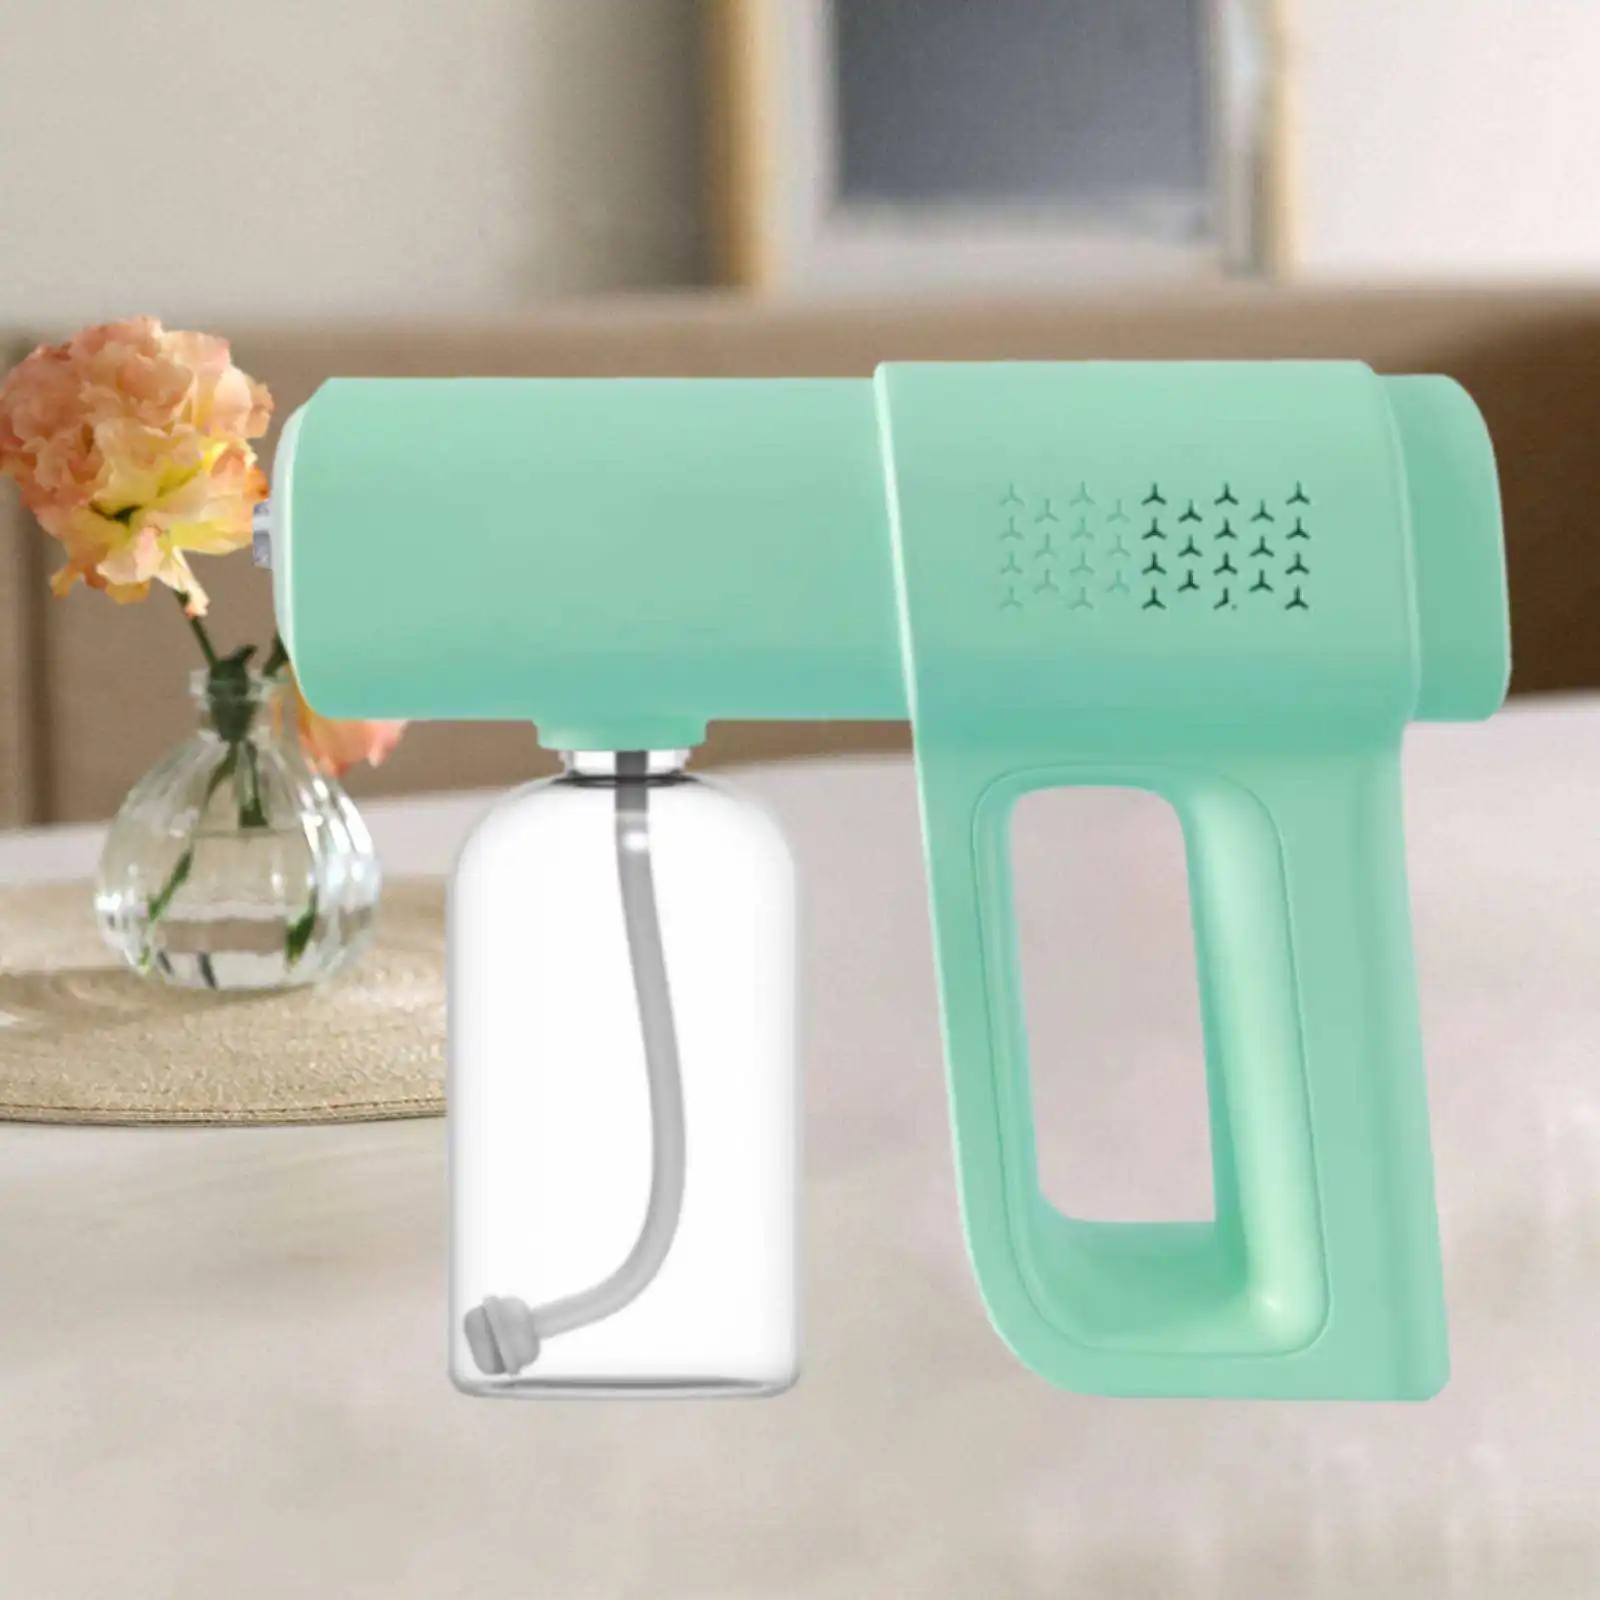 Handheld Wireless Portable Sanitizer Nano Steam Spray Fogger Sanitizing Disinfection Machine for Home Office Car Hotel Room